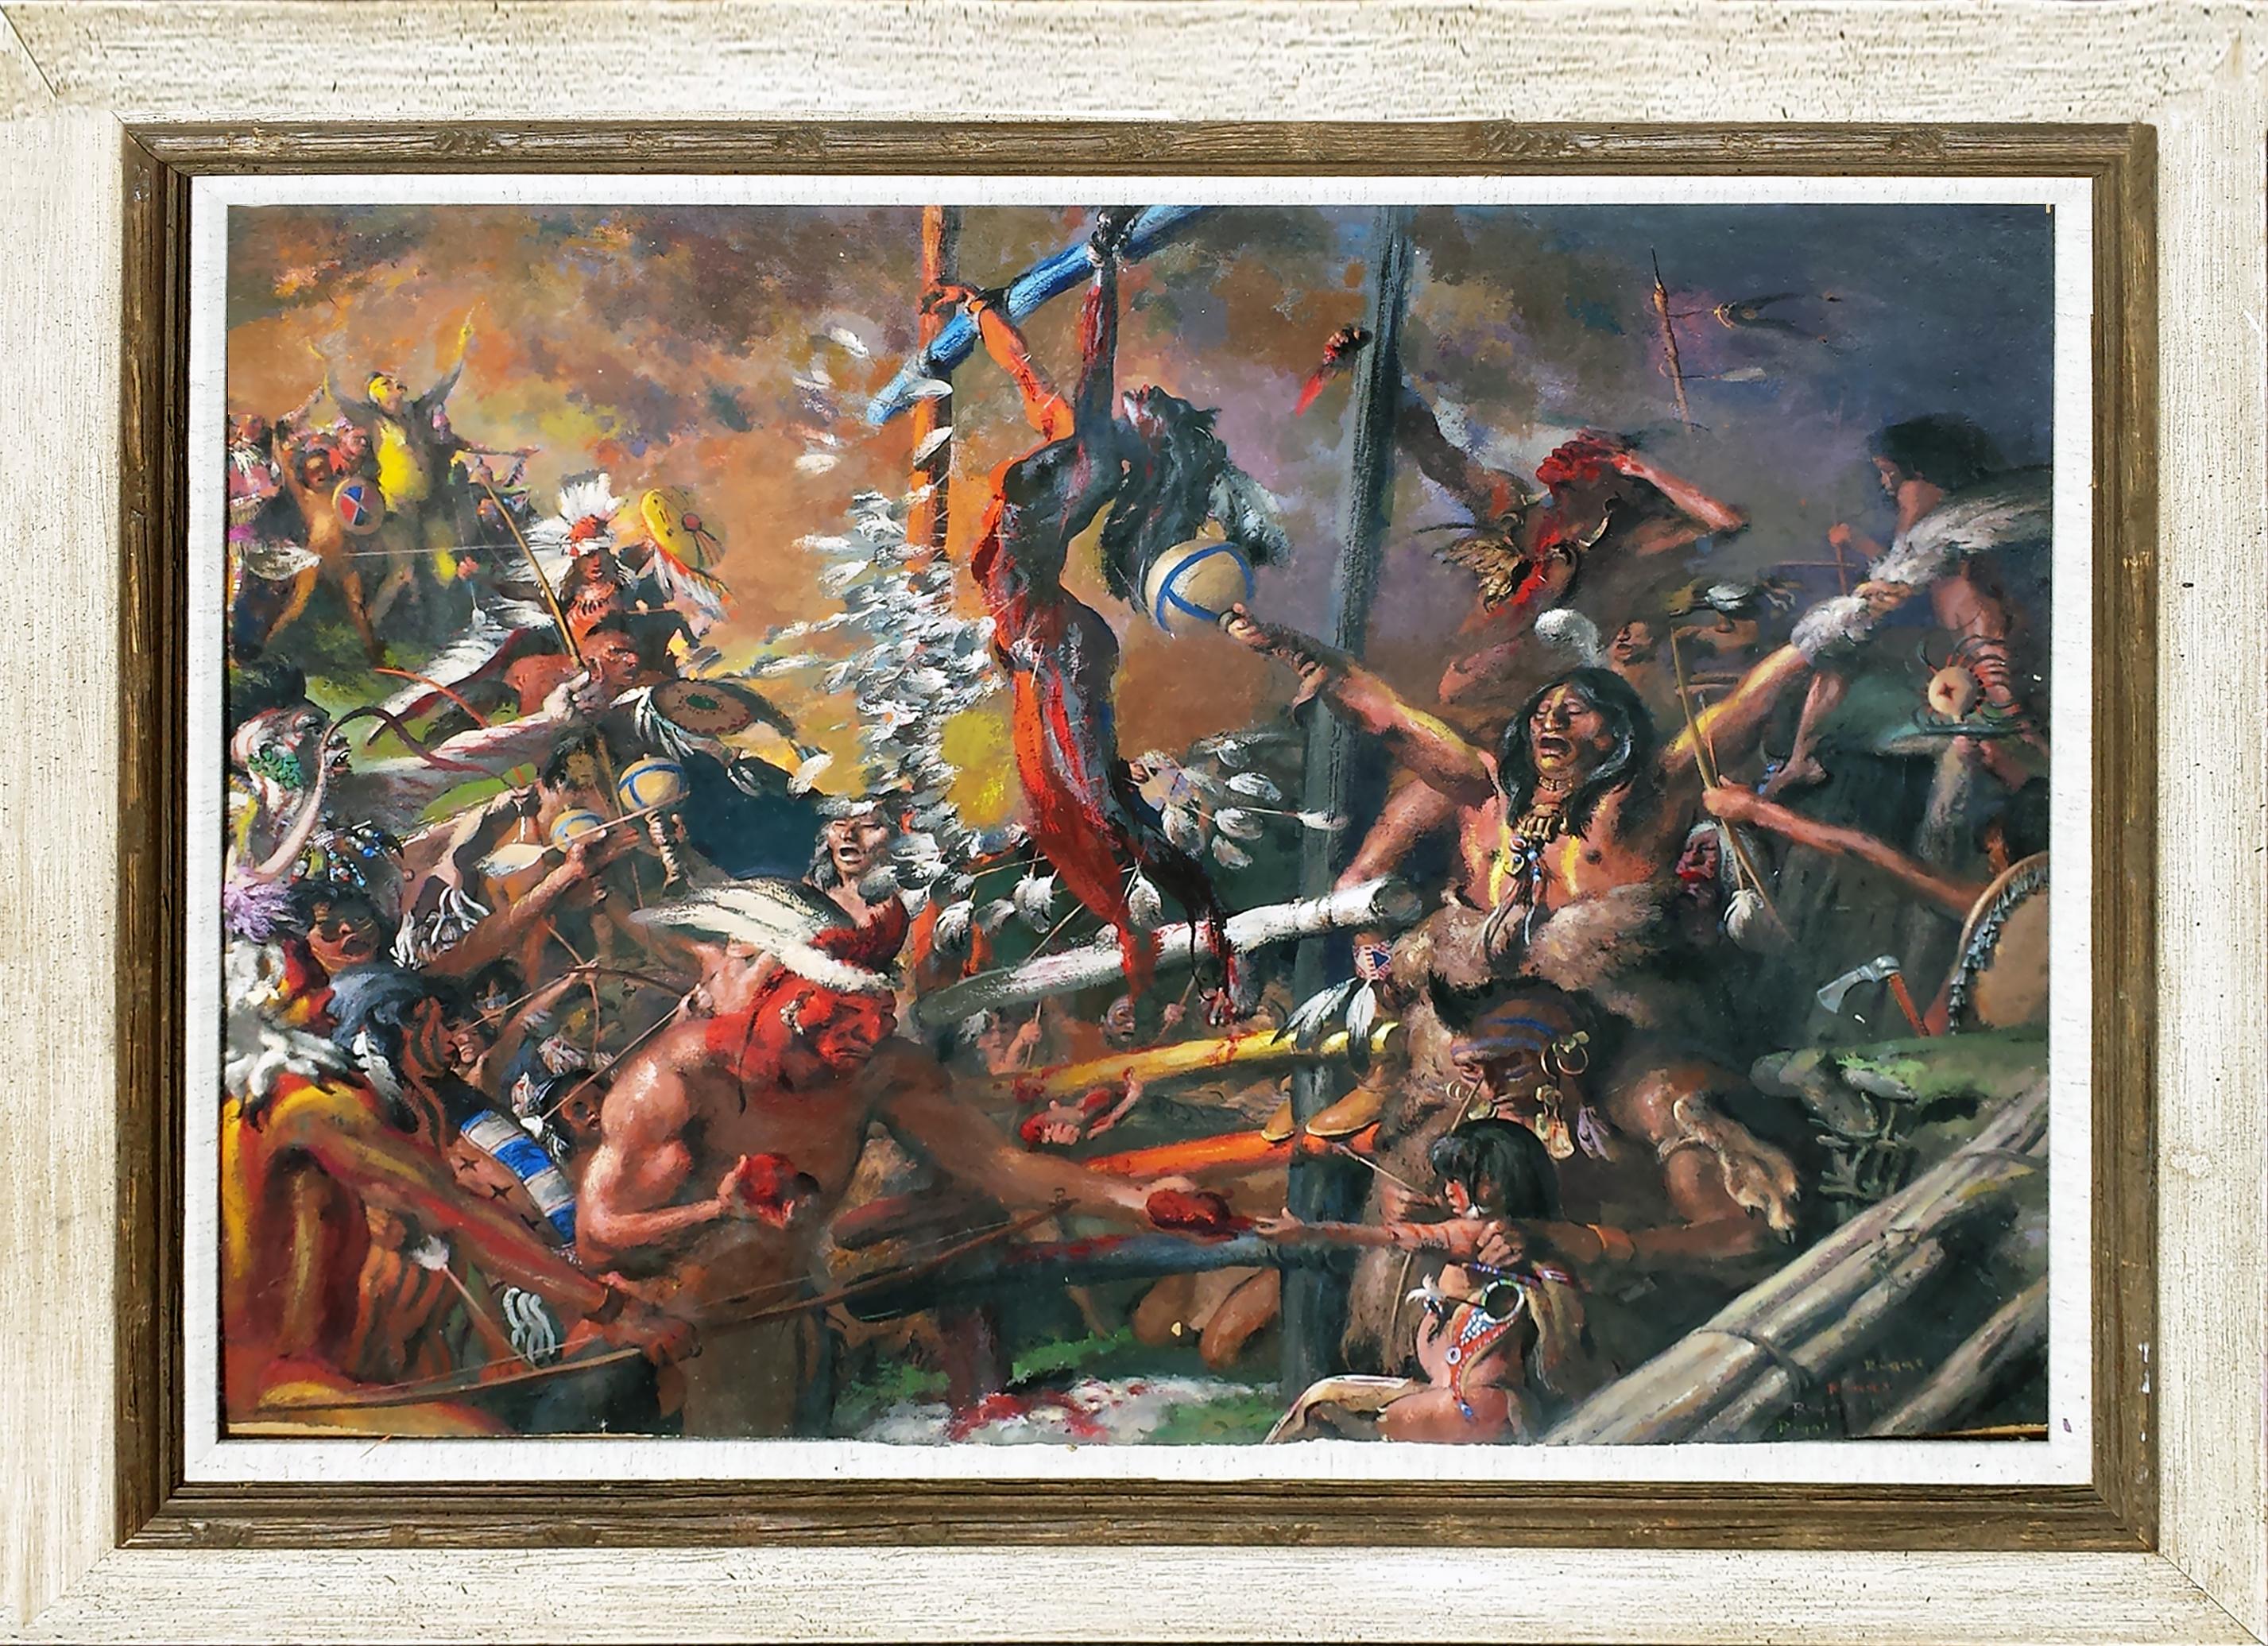  Indian sacrificial ceremony -   Aztec  Human Sacrifice  - Painting by Robert Riggs